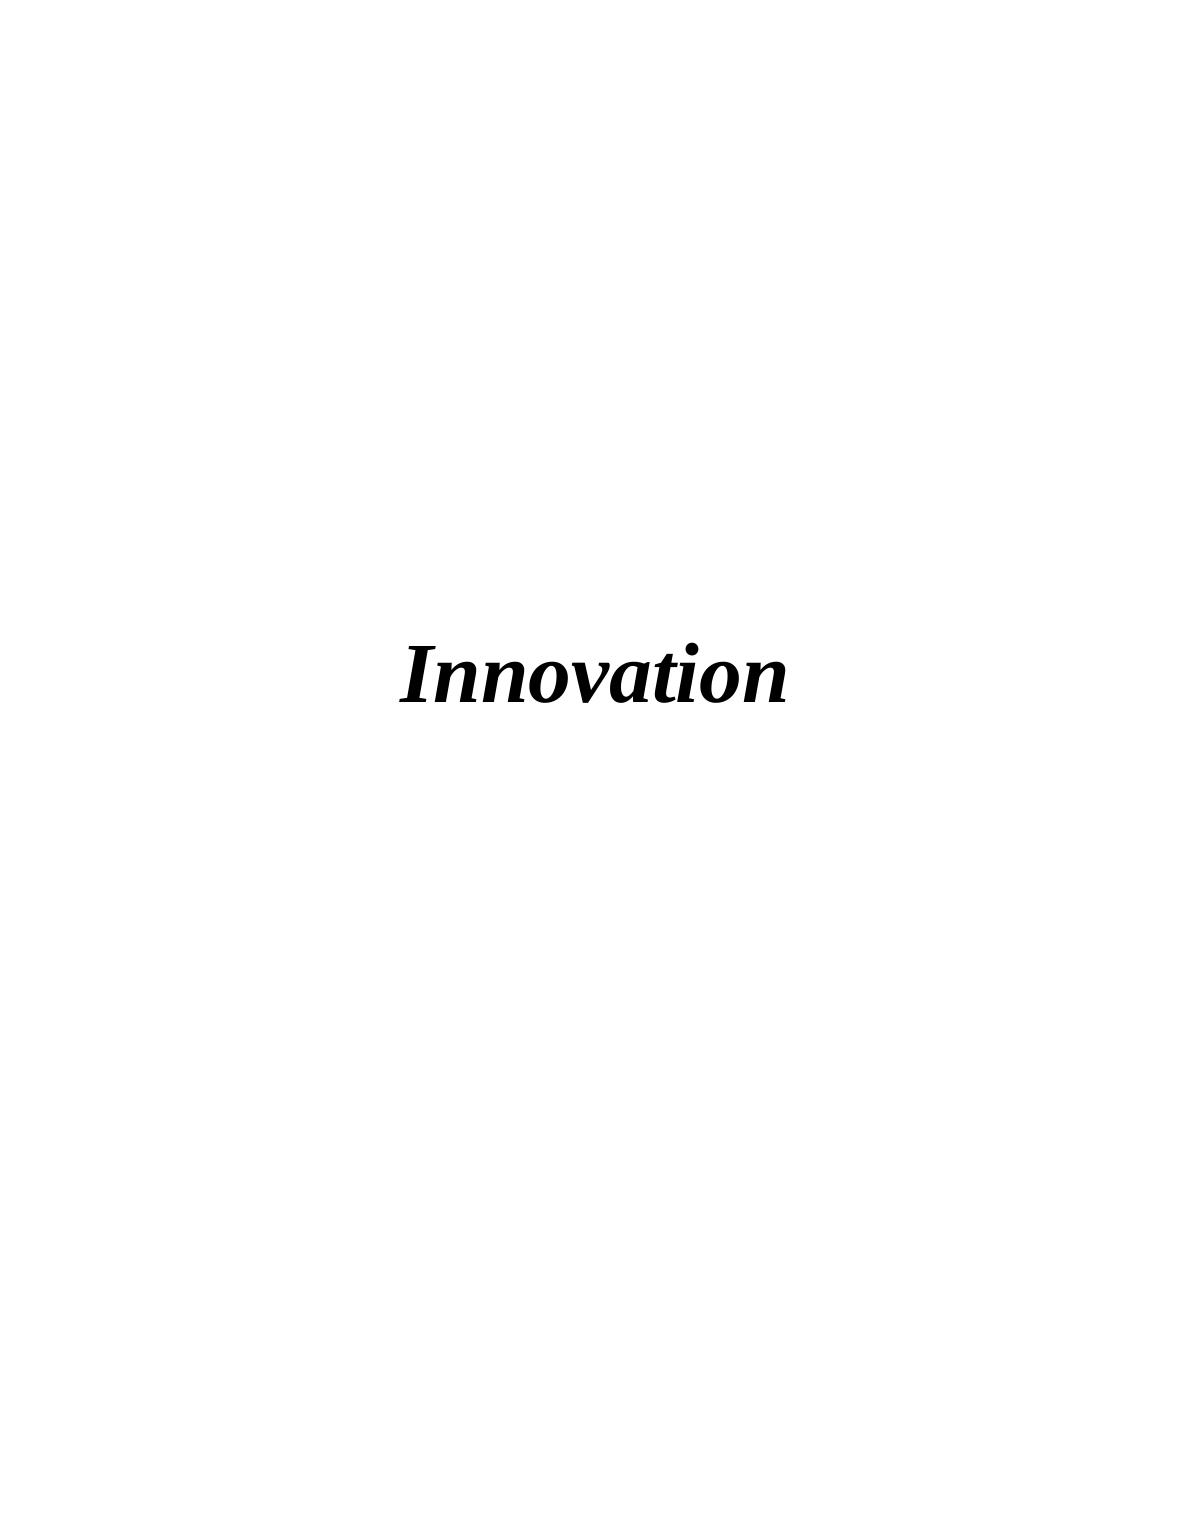 Innovation INTRODUCTION_1